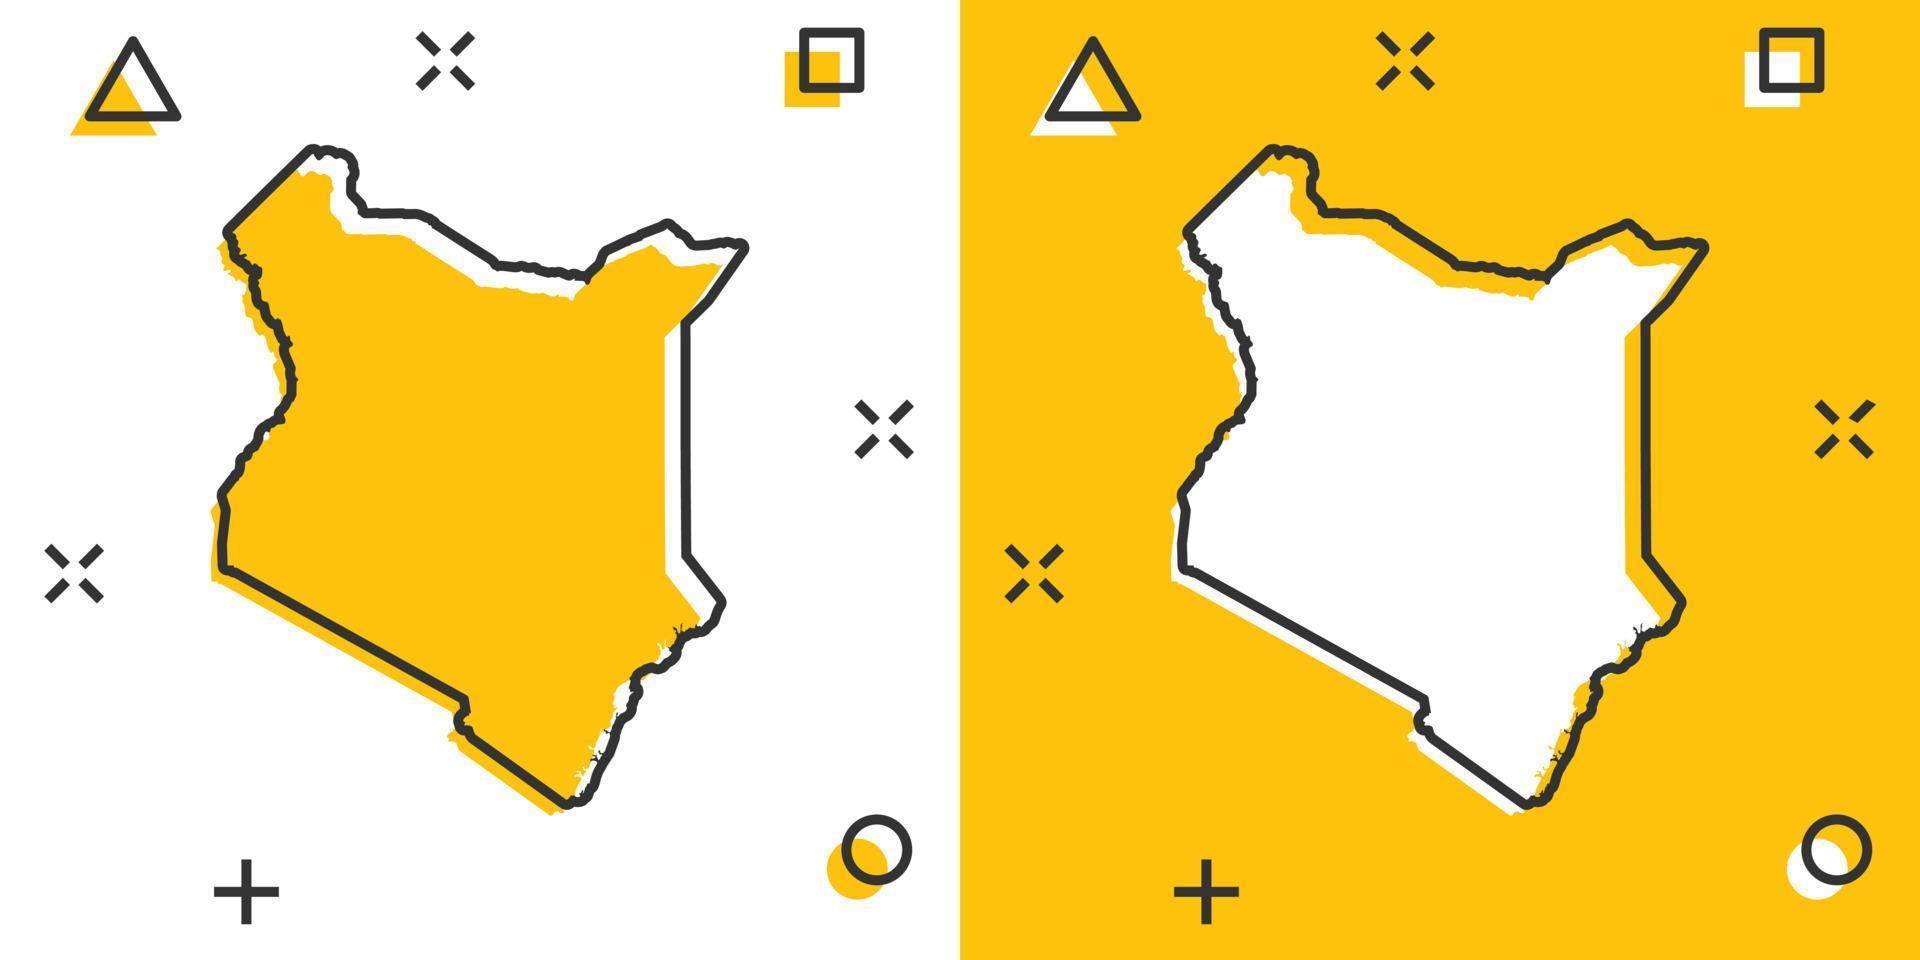 Vektor-Cartoon-Kenia-Kartensymbol im Comic-Stil. Kenia Zeichen Abbildung Piktogramm. Kartografie-Karten-Business-Splash-Effekt-Konzept. vektor